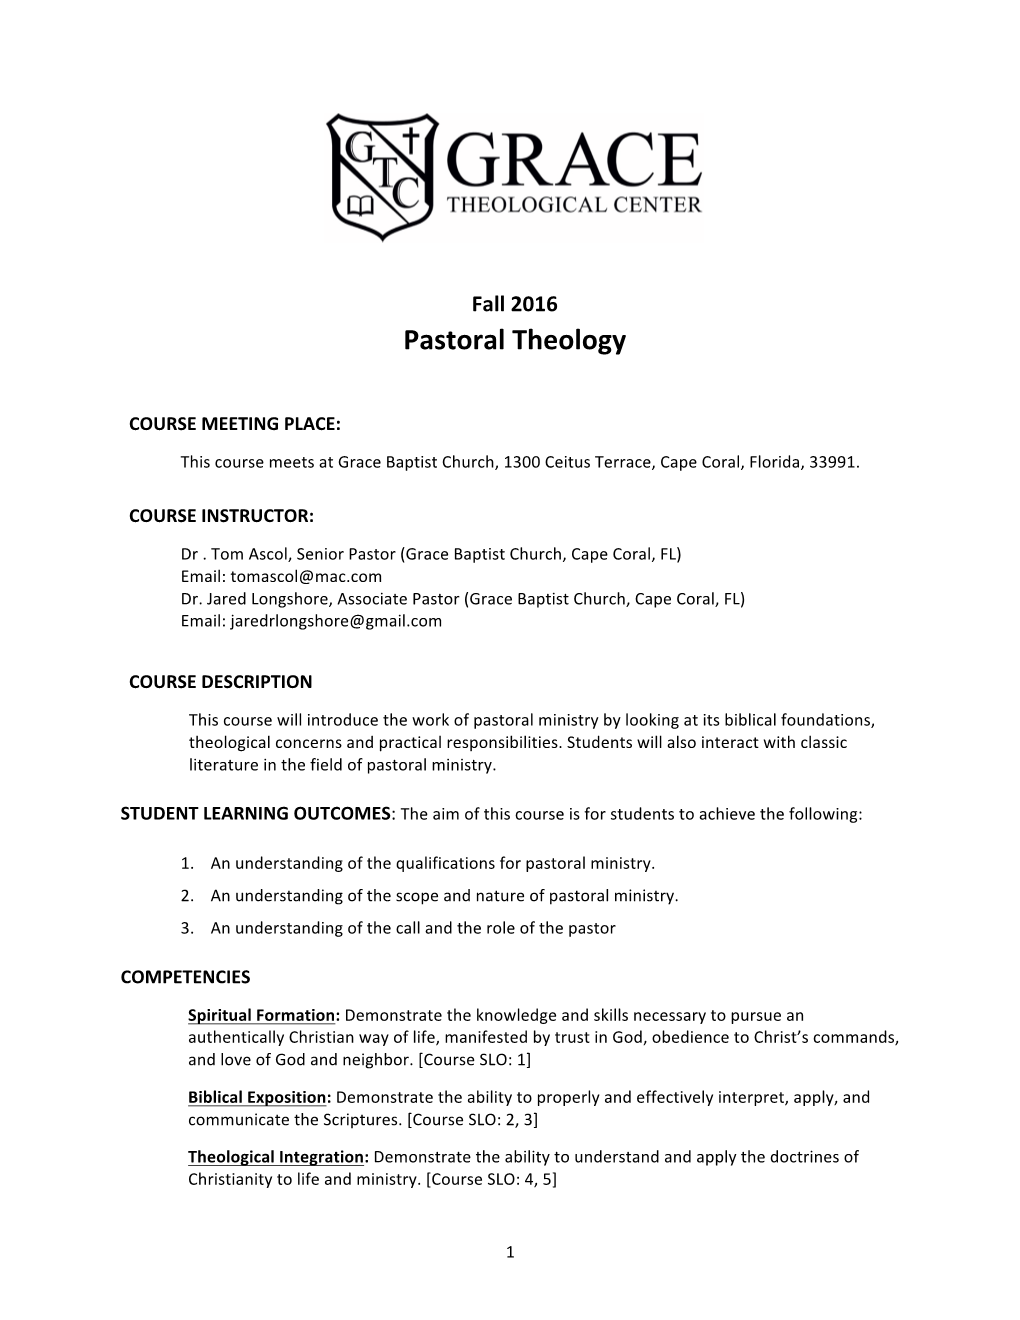 GTC Pastoral Theology FA16